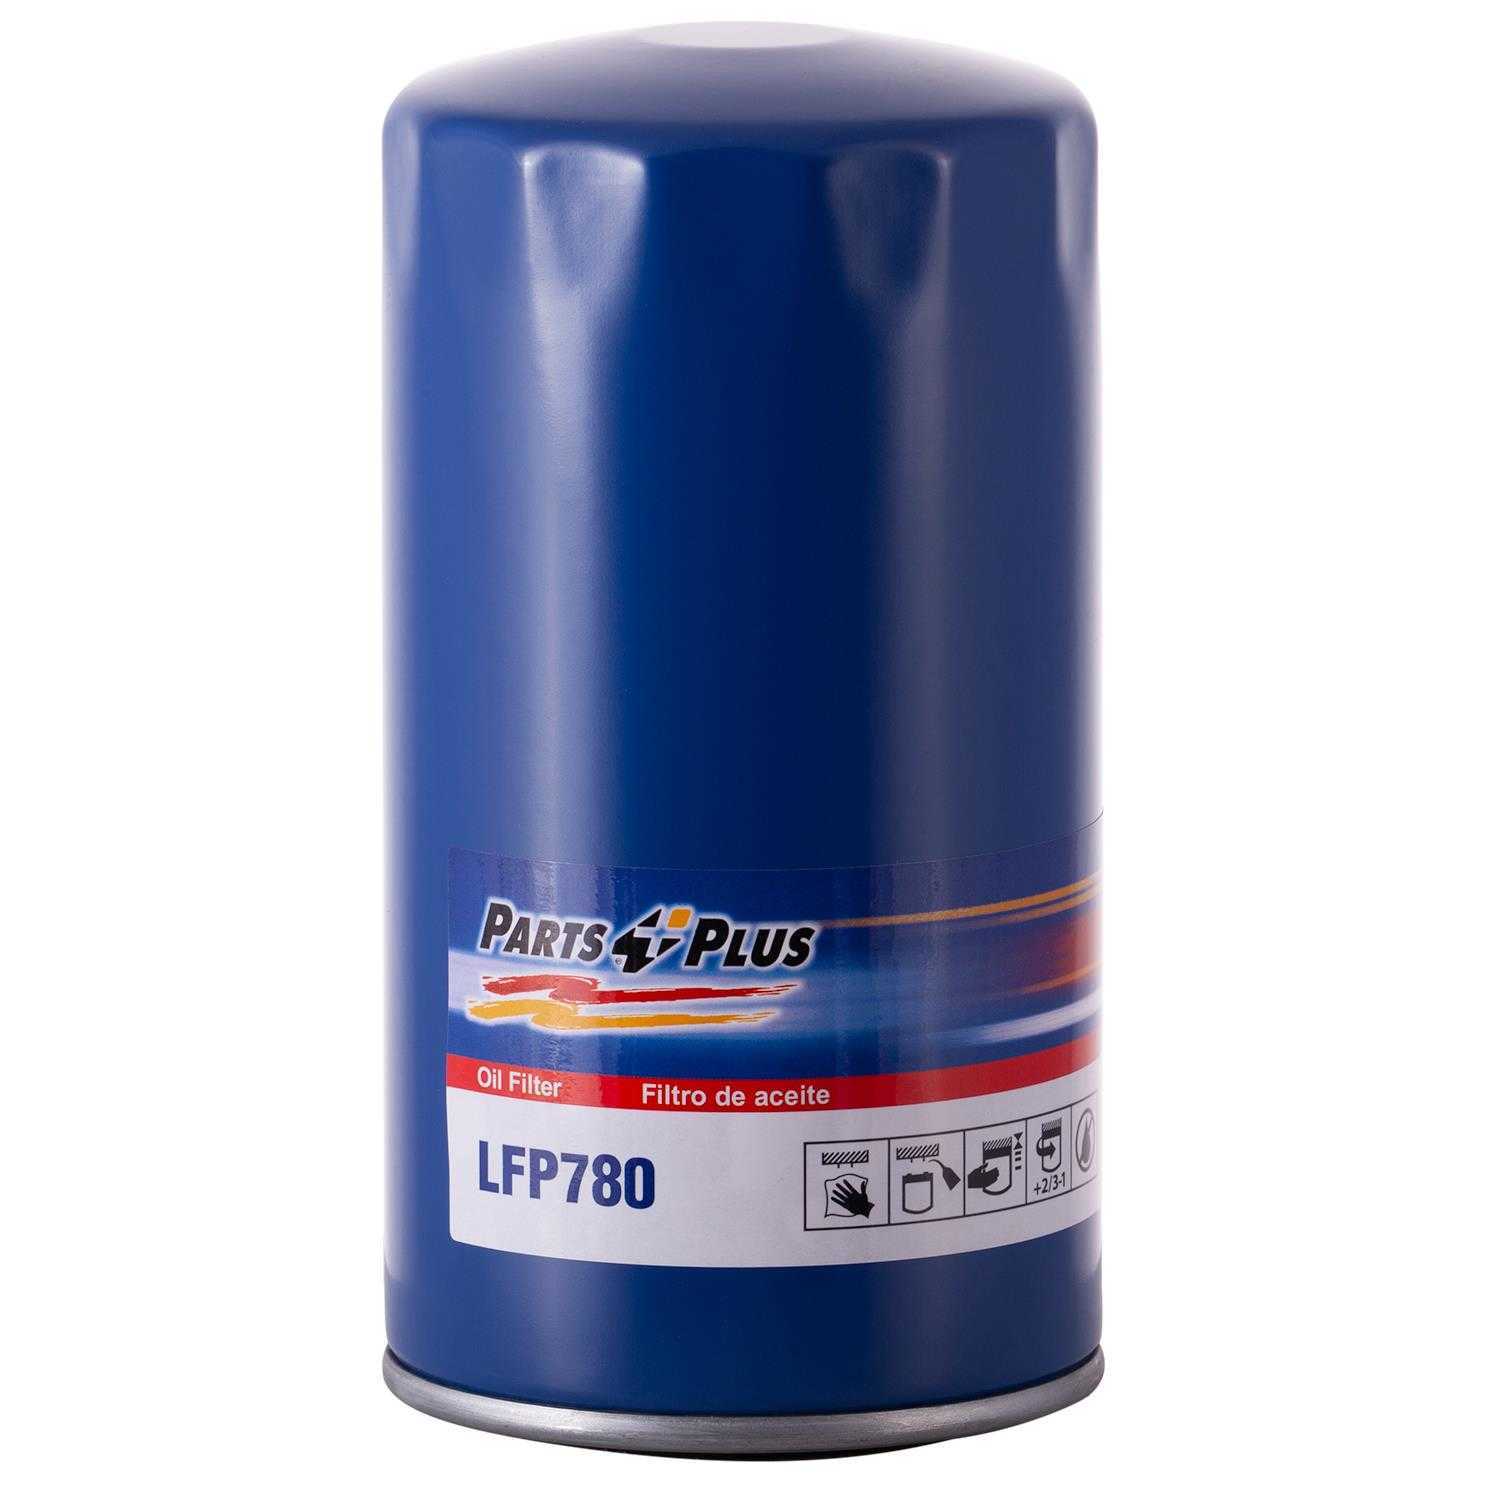 PARTS PLUS FILTERS BY PREMIUM GUARD - Standard Life Oil Filter Element - PLF LFP780